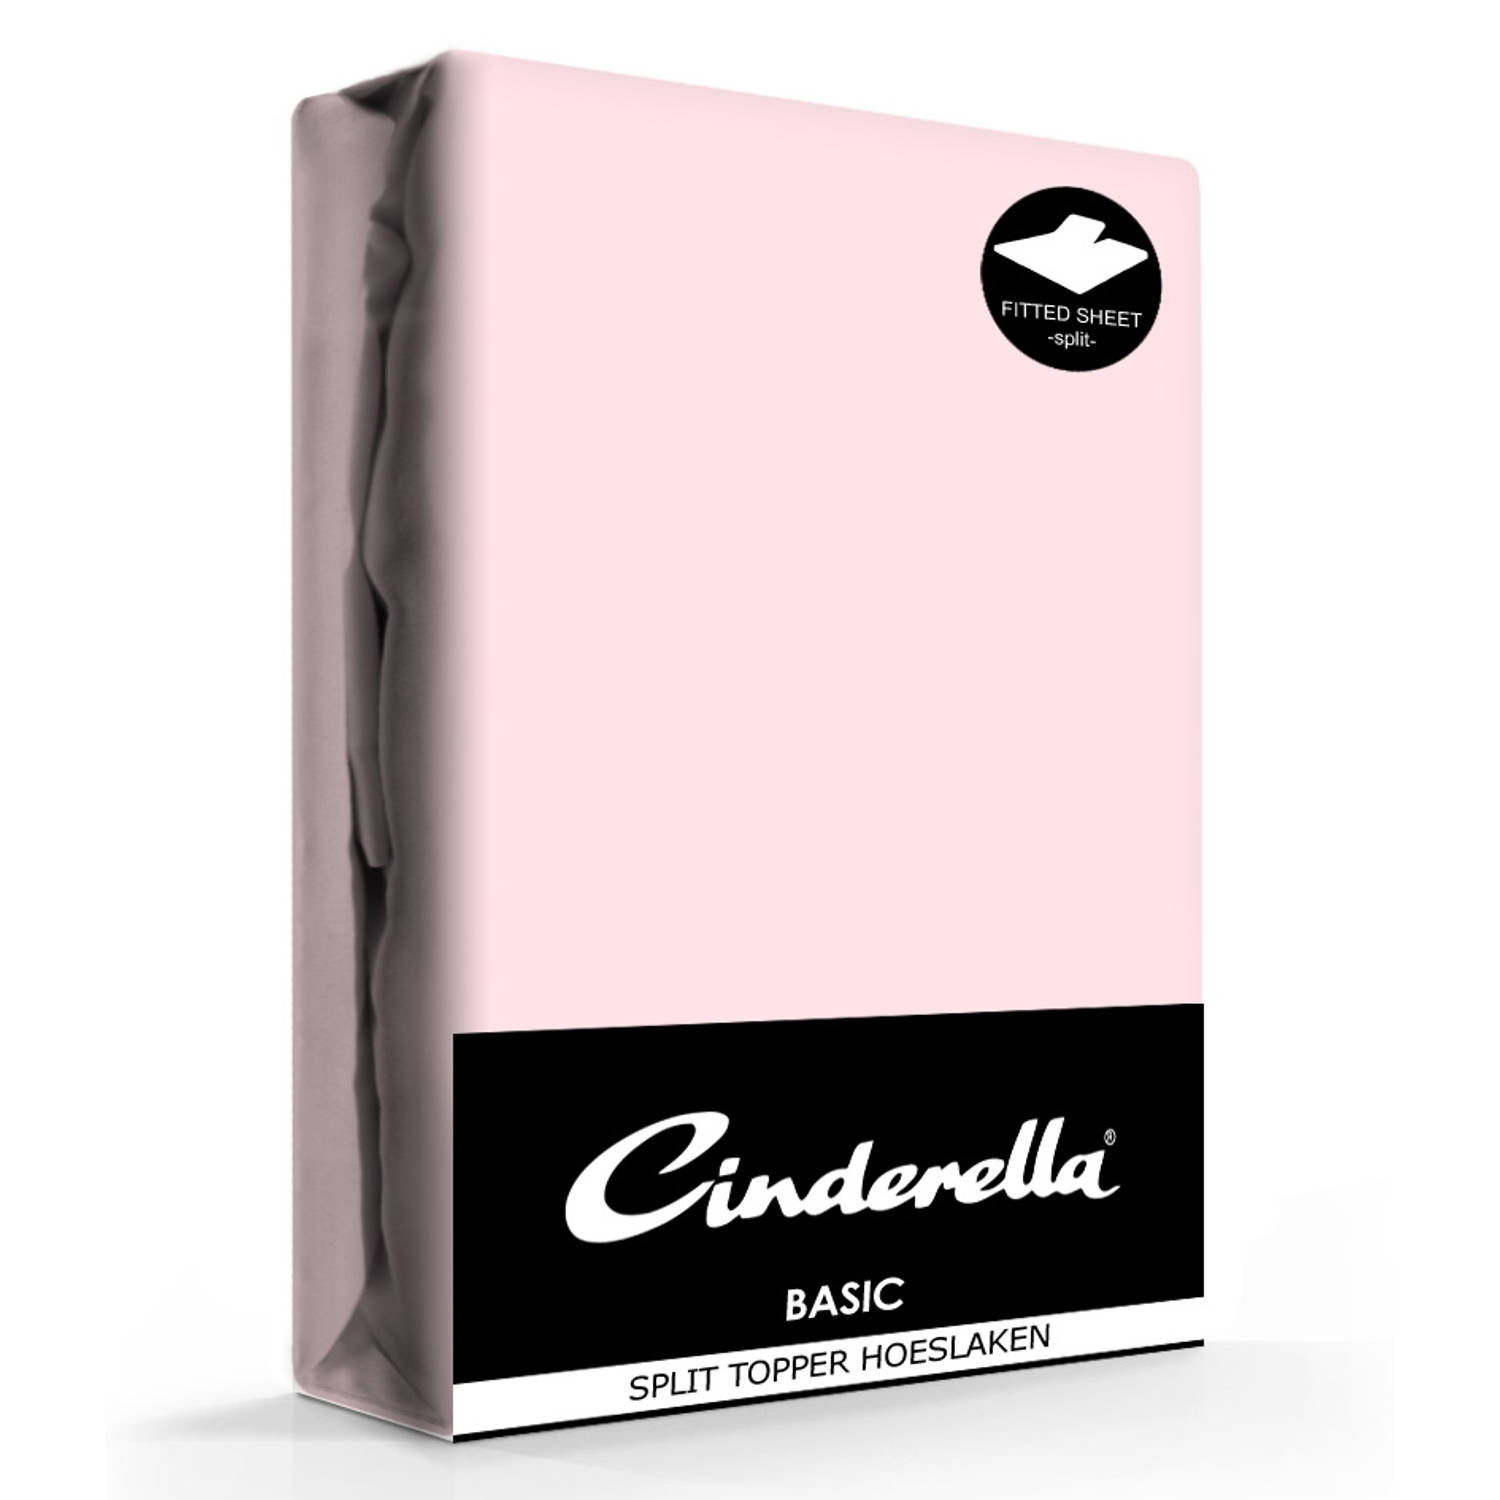 Cinderella Splittopper Hoeslaken Basic Percaline Candy-180 x 200 cm